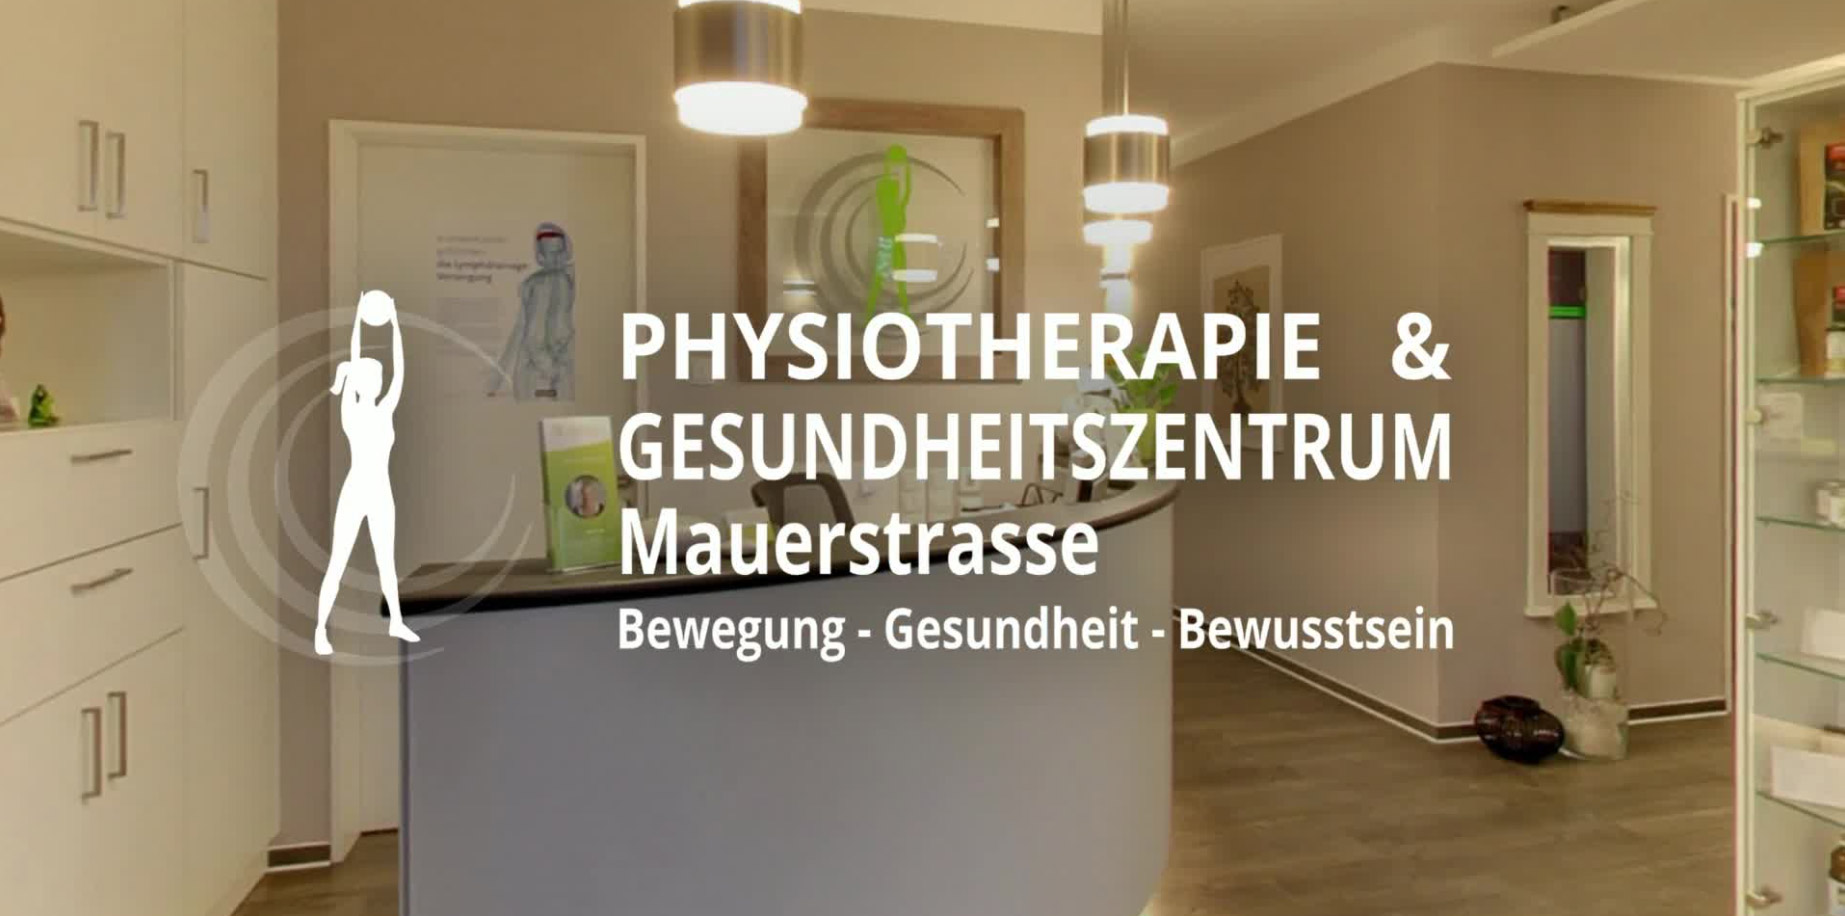 Atlasbehandlung,Atlastherapie,Atlaskorrektur - Physiotherapie & Gesundheitzzentrum Norddeutschland, Ludwigslust